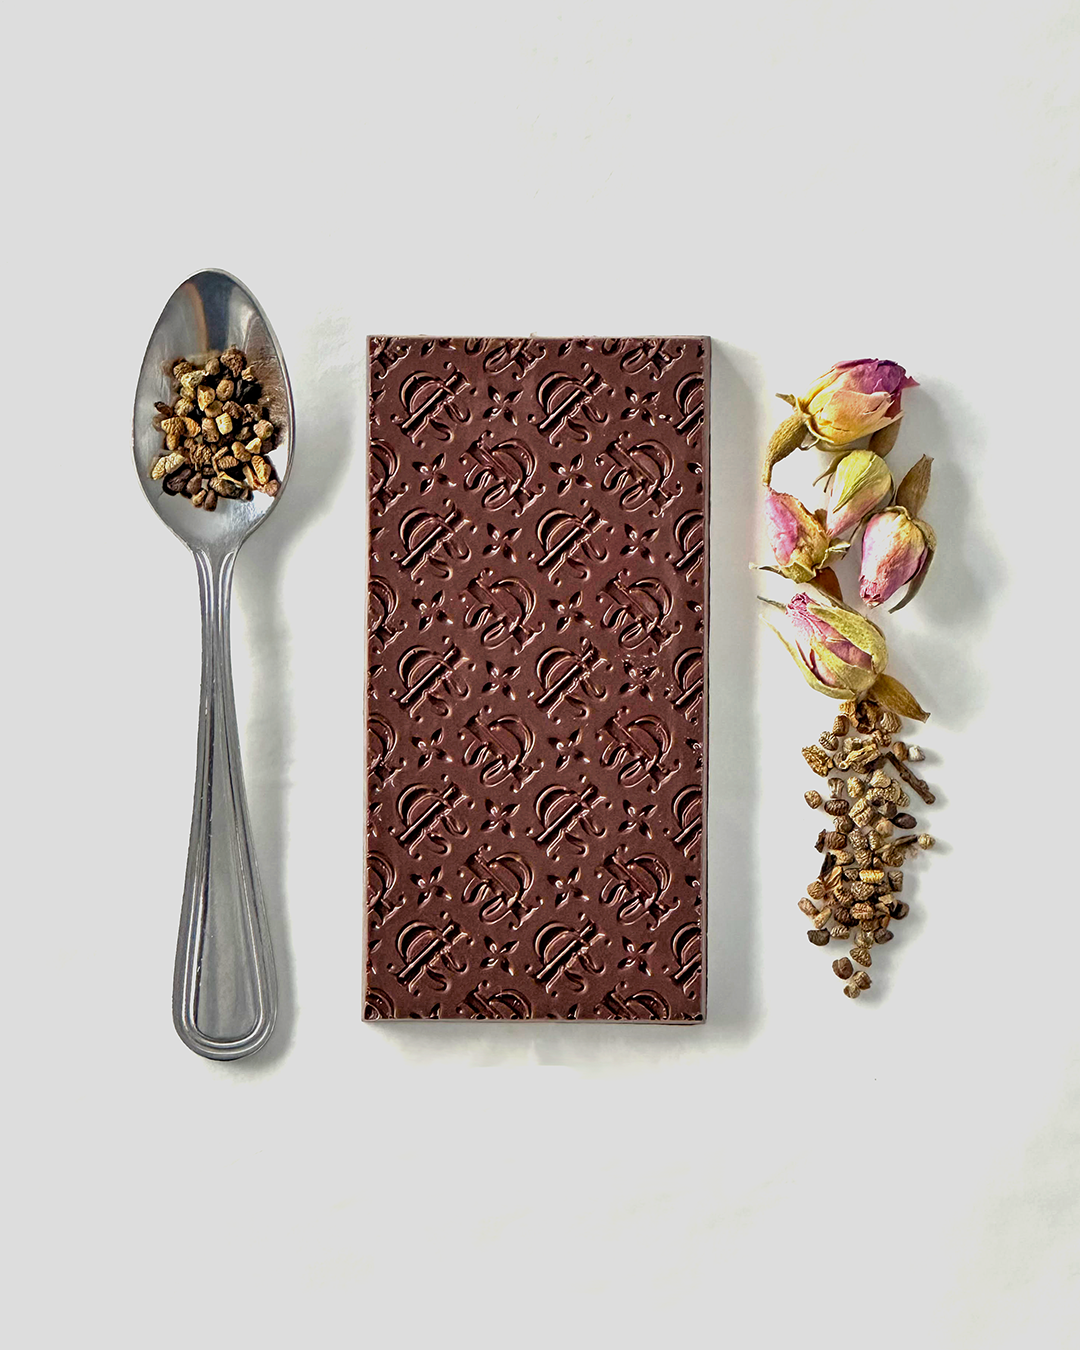 ROSE Texture Chocolate Bar Silicione Mold